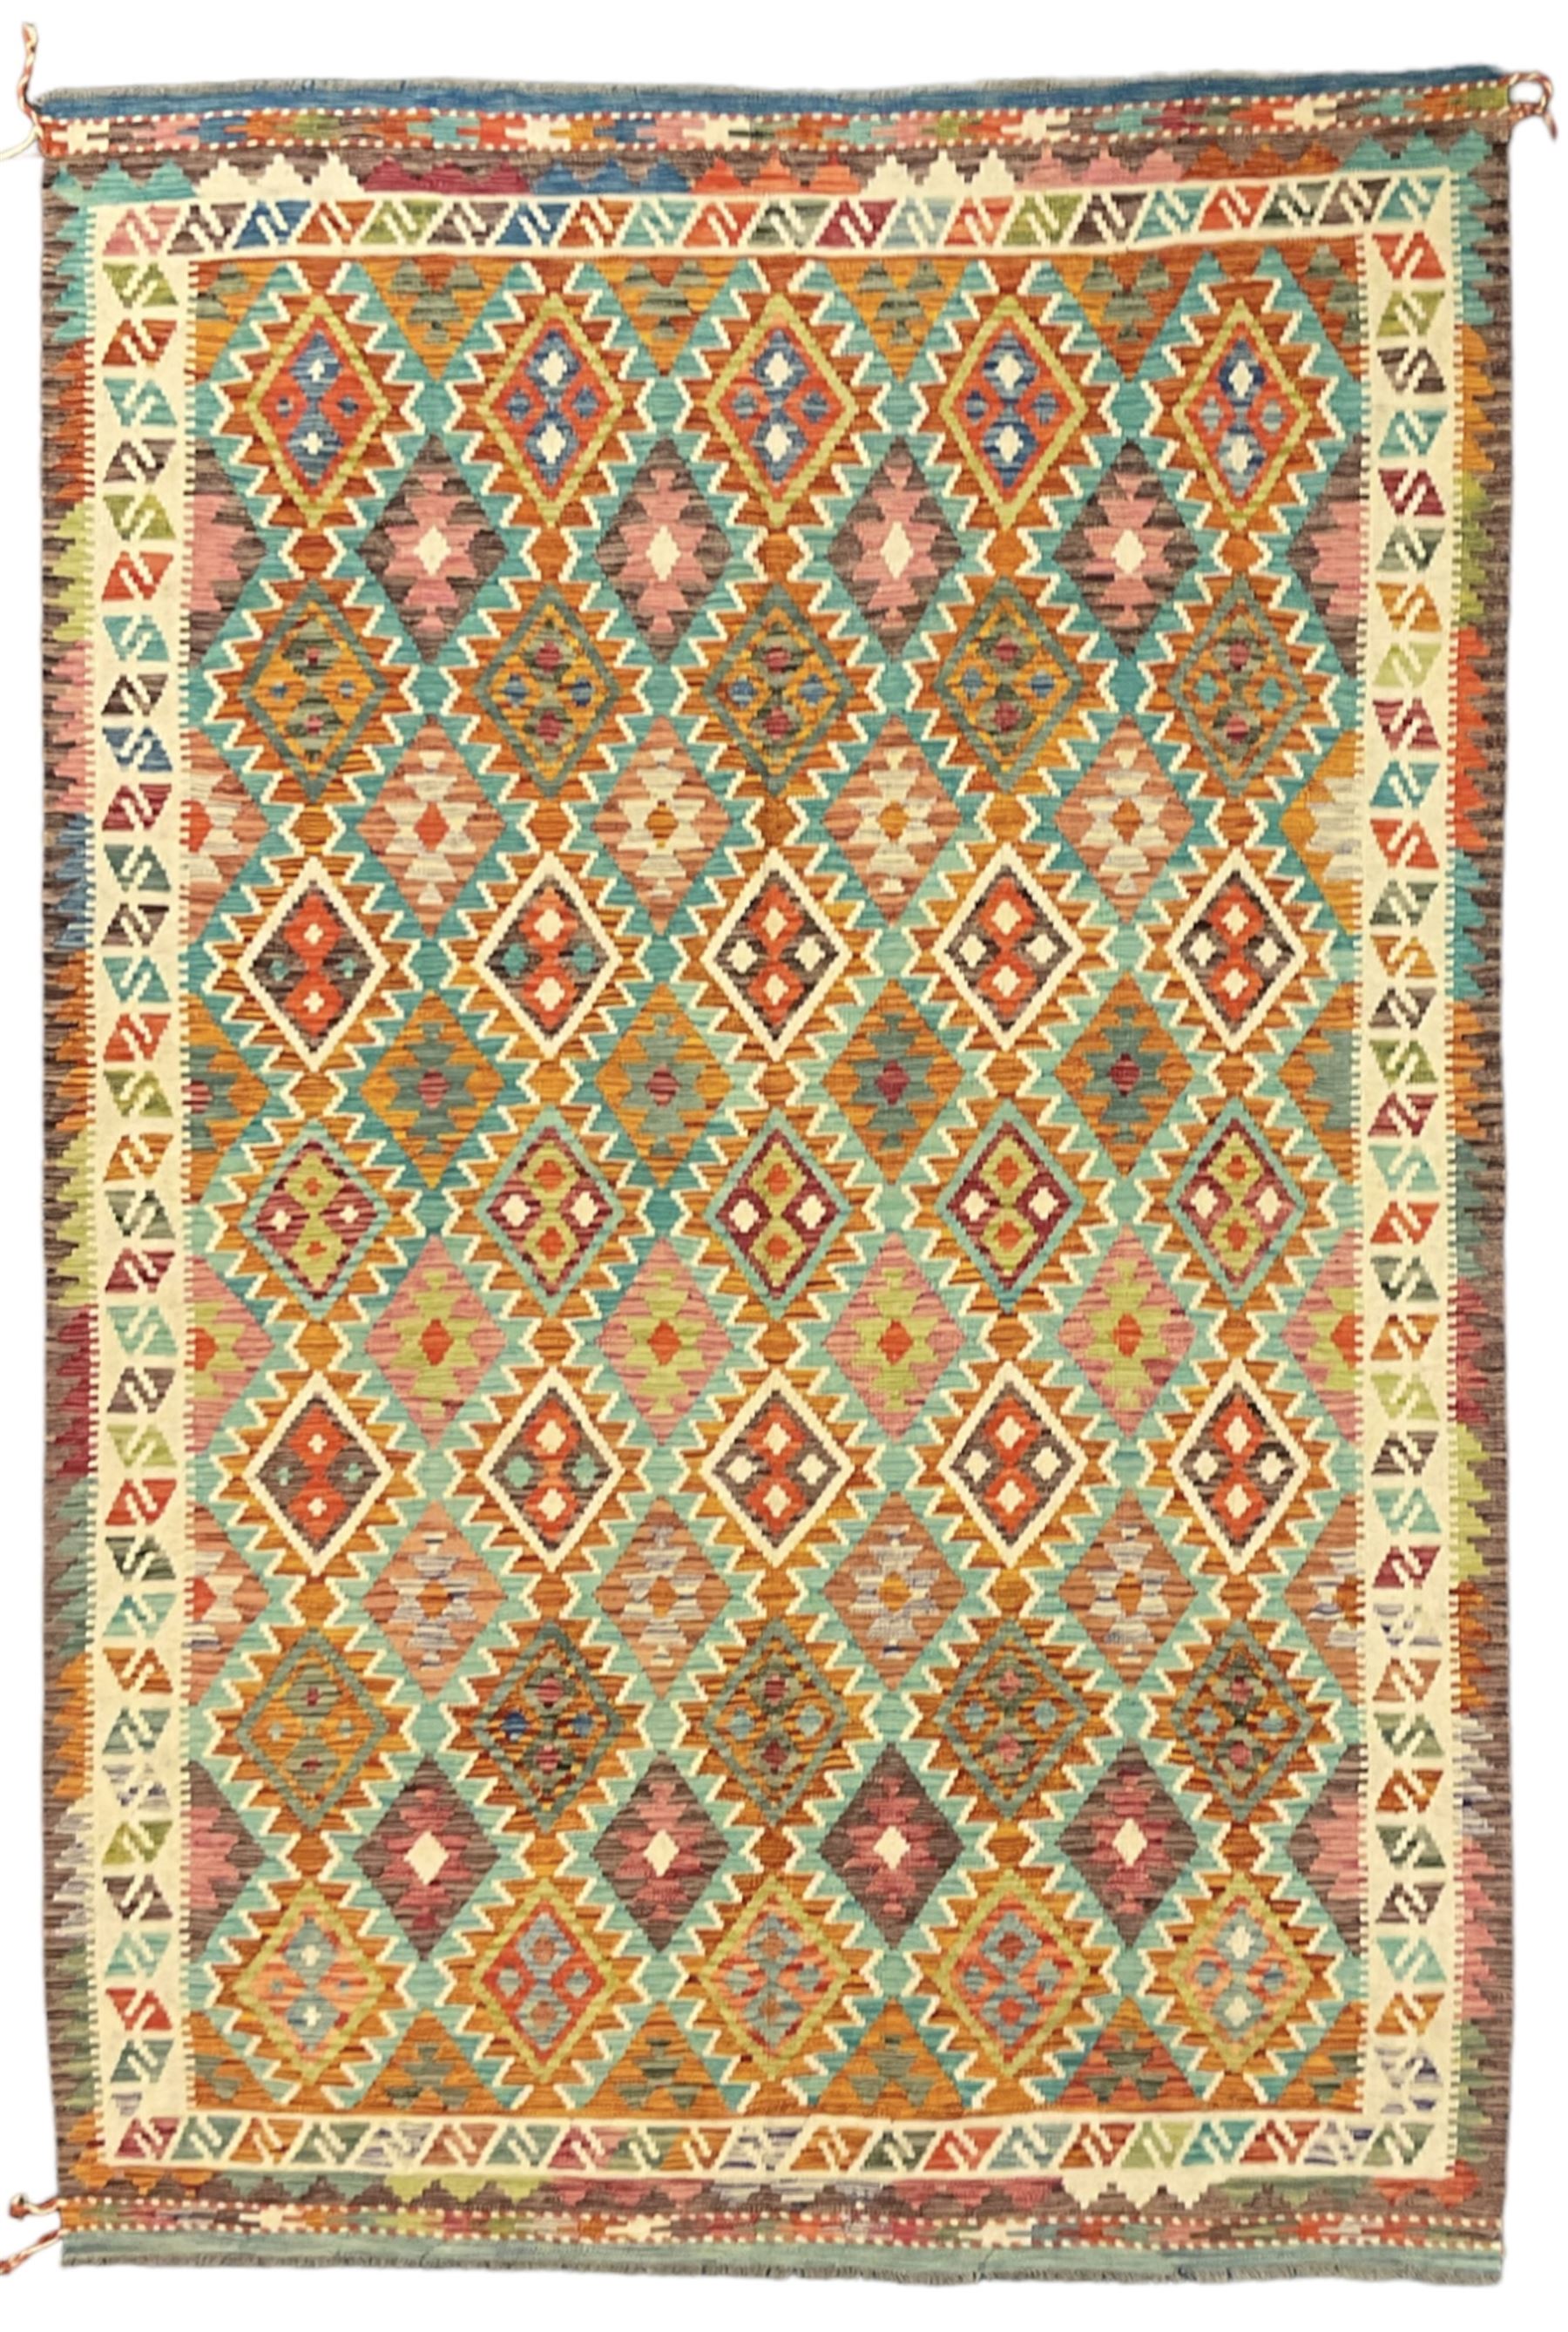 Anatolian Turkish Kilim multi-colour rug - Image 7 of 7